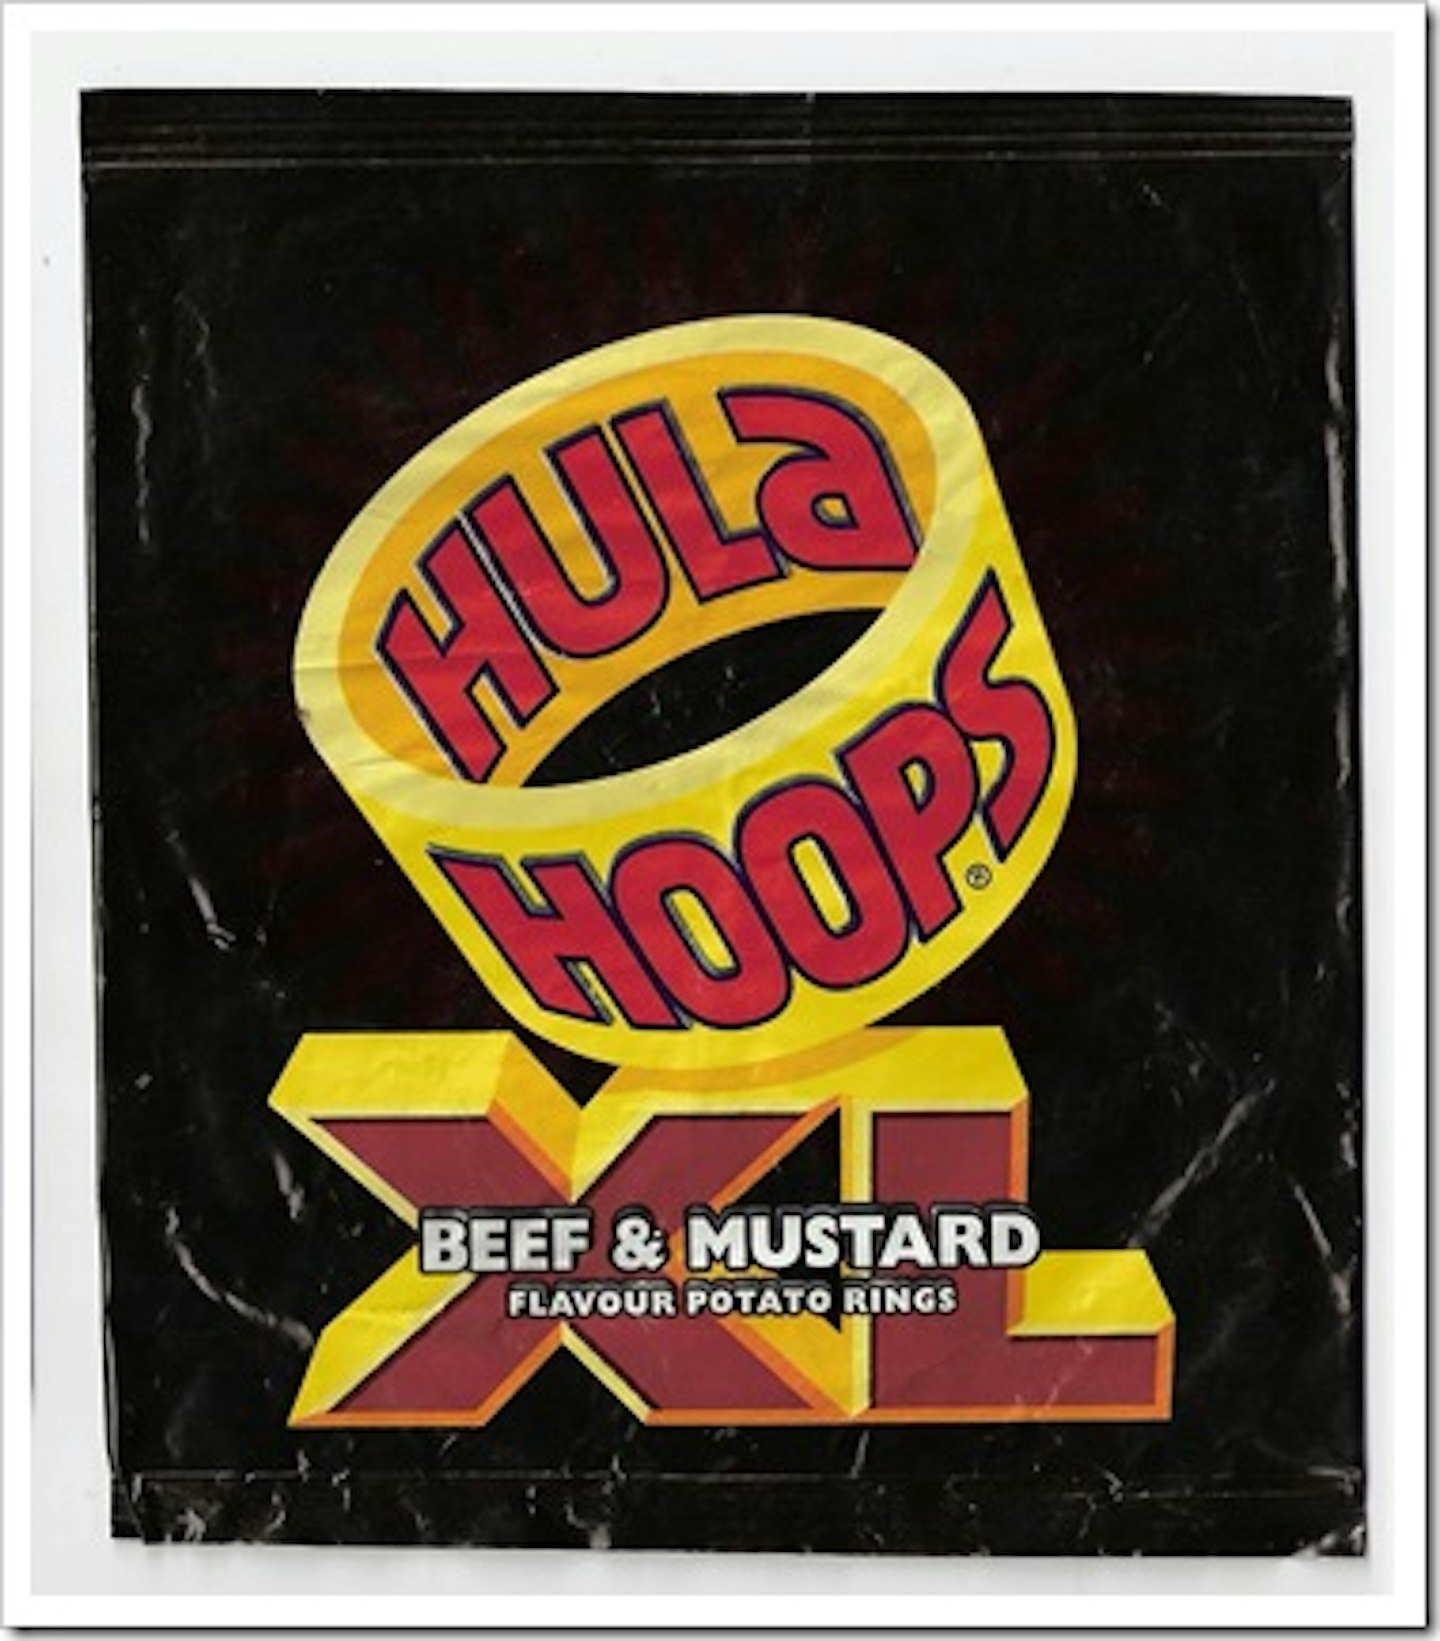 Discontinued crisps Hula Hoops XL